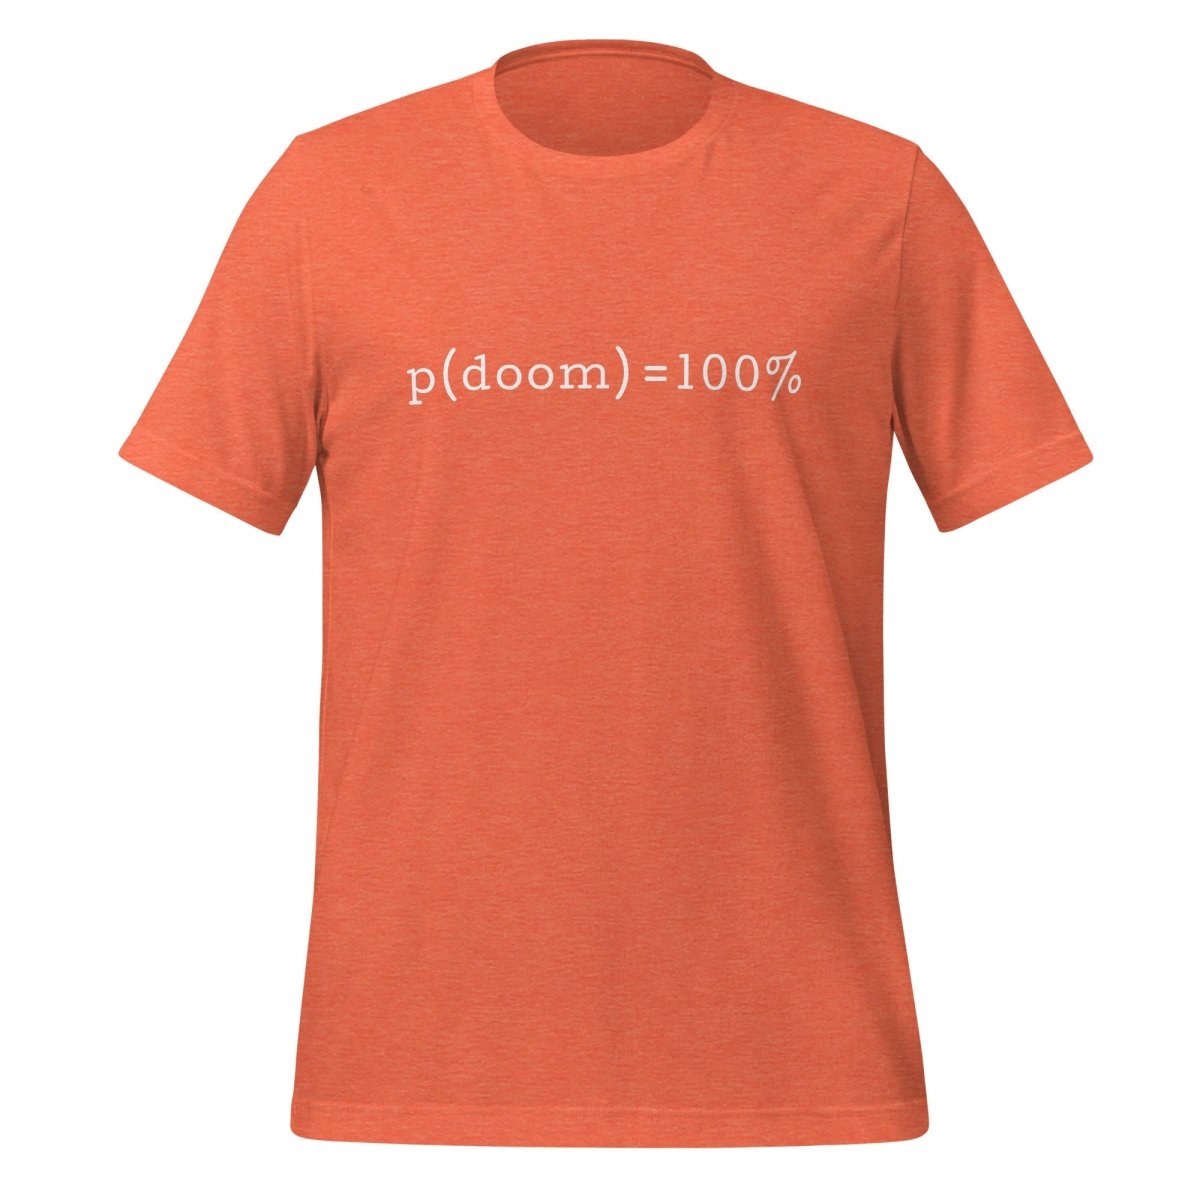 p(doom) = 100% T - Shirt (unisex) - Heather Orange - AI Store